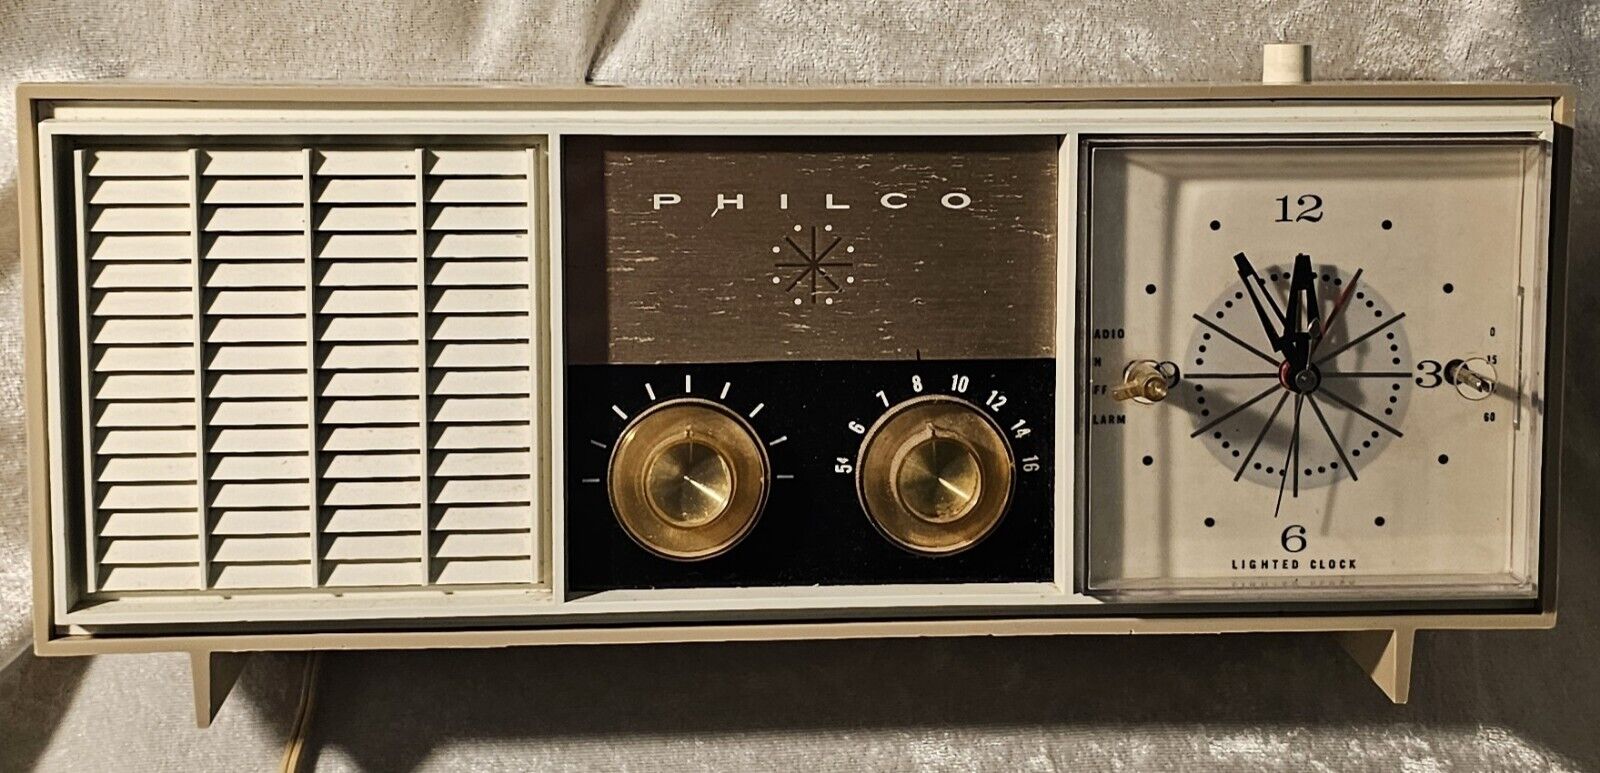 Philco Vintage Tube Clock AM Radio Rare Find Collectible Working Radio